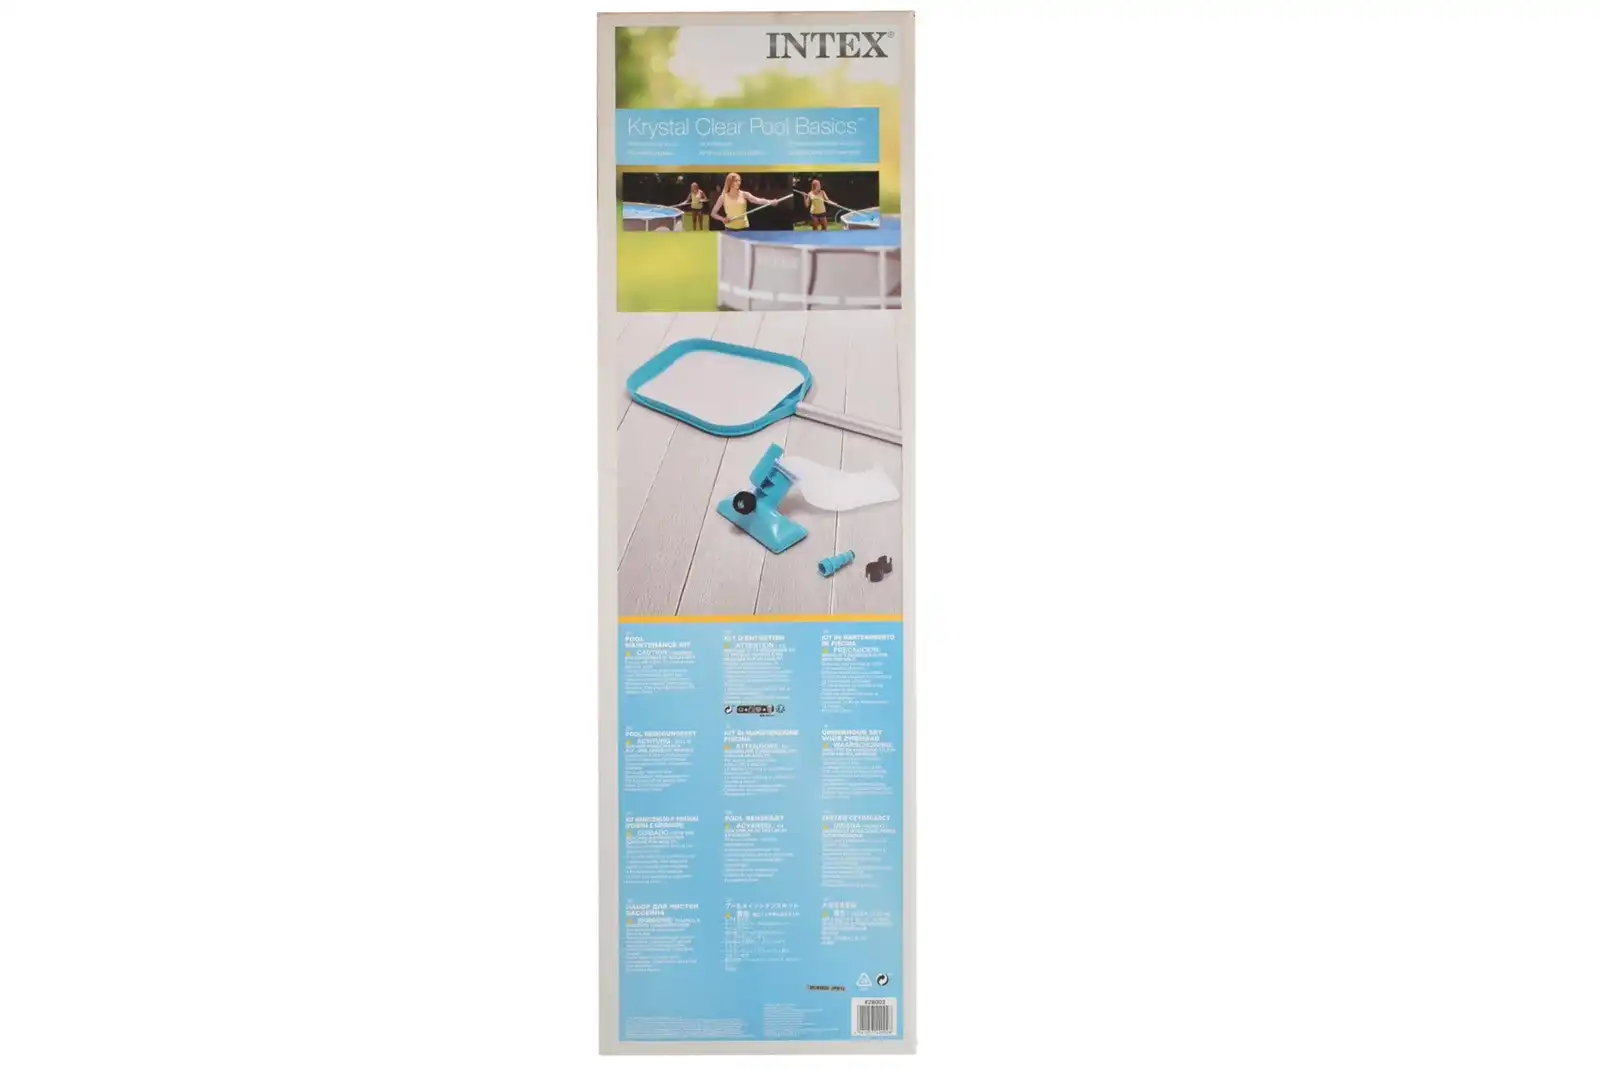 Intex Pool Maintenance Kit